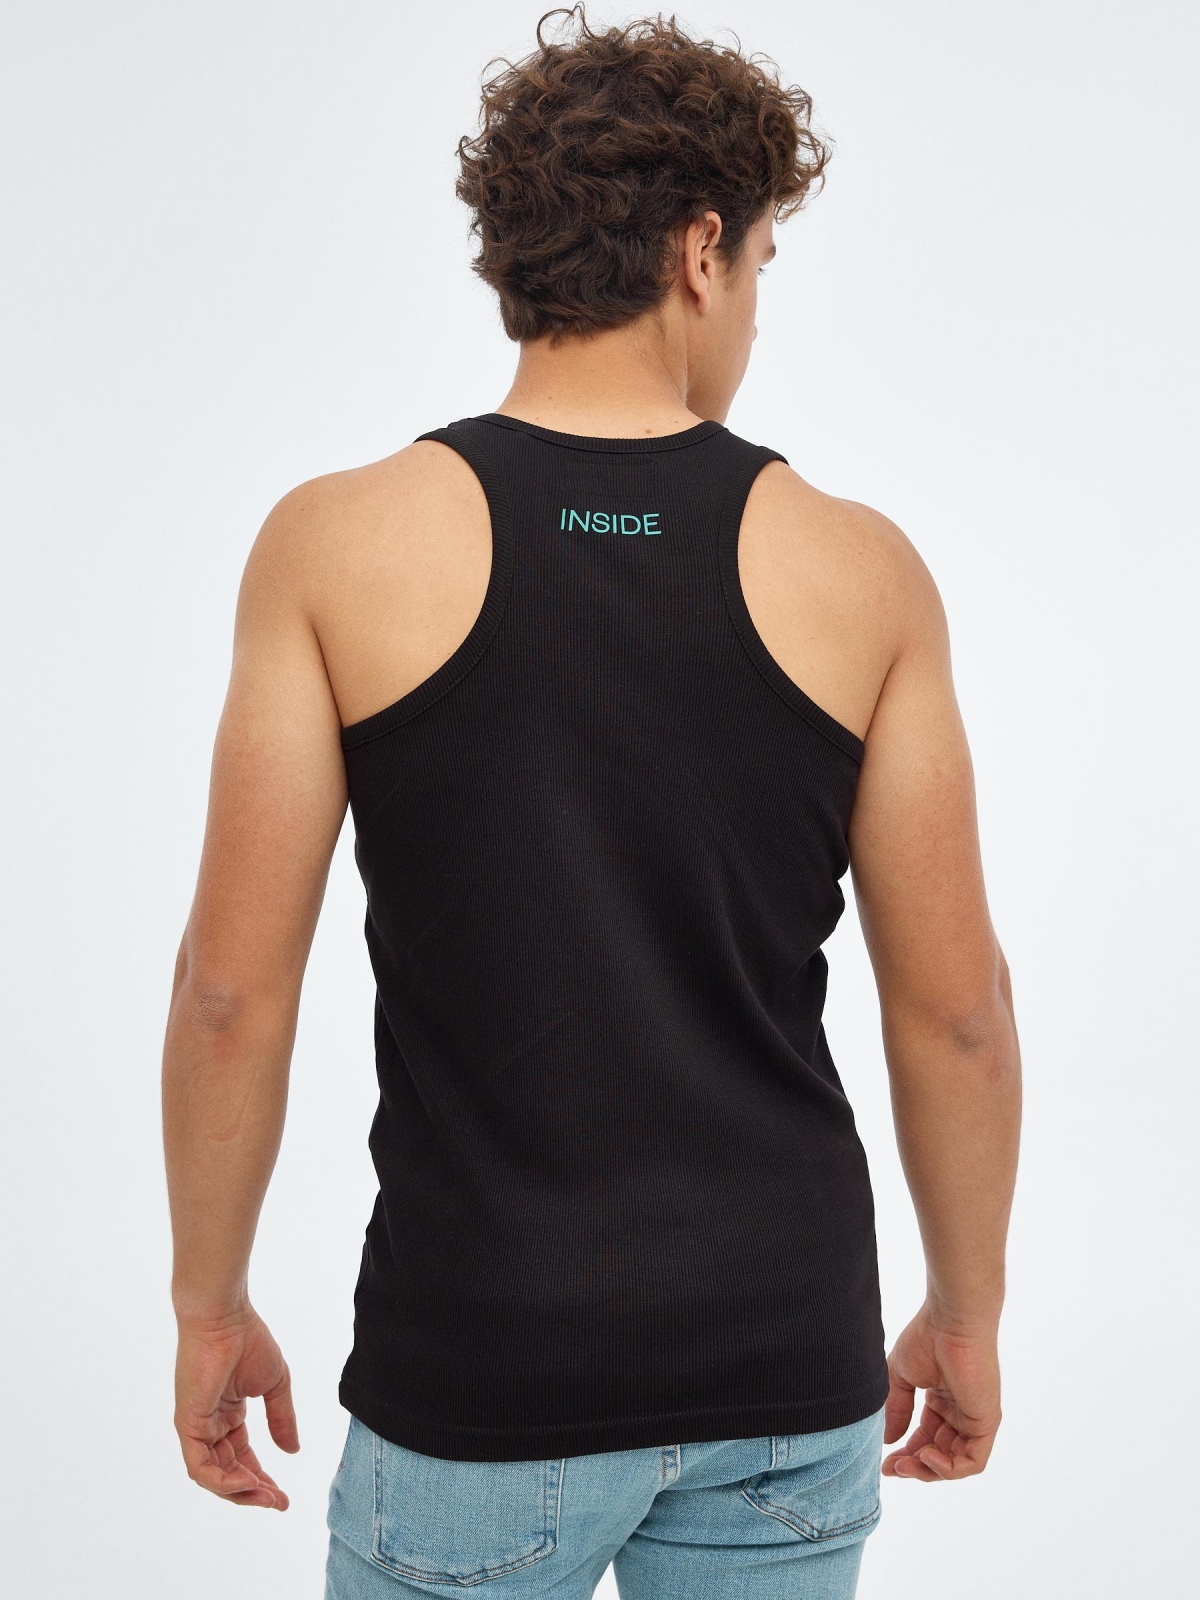 Camiseta básica espalda nadadora negro vista media trasera